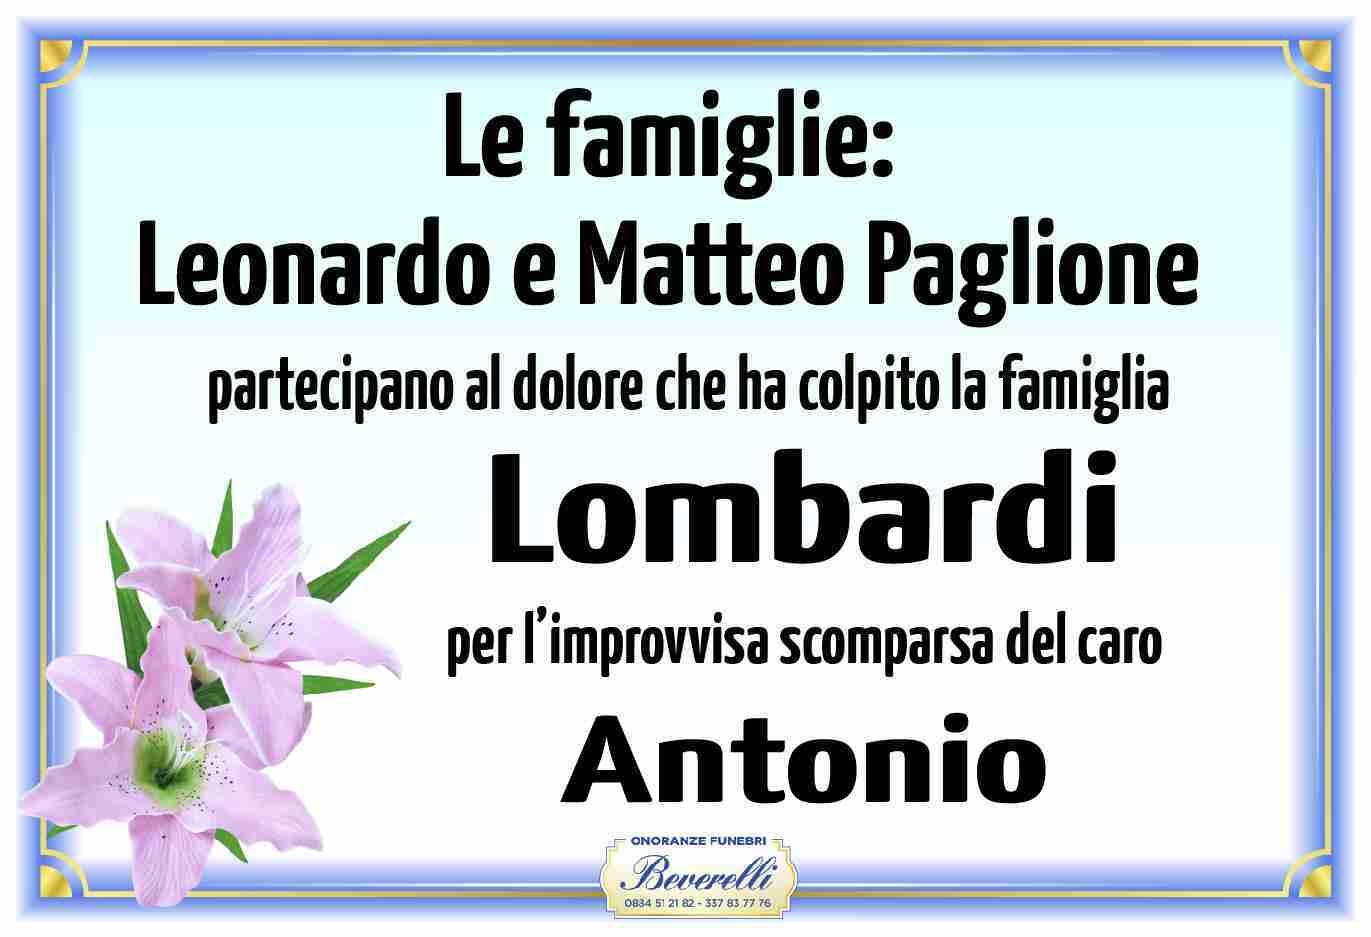 Antonio Lombardi